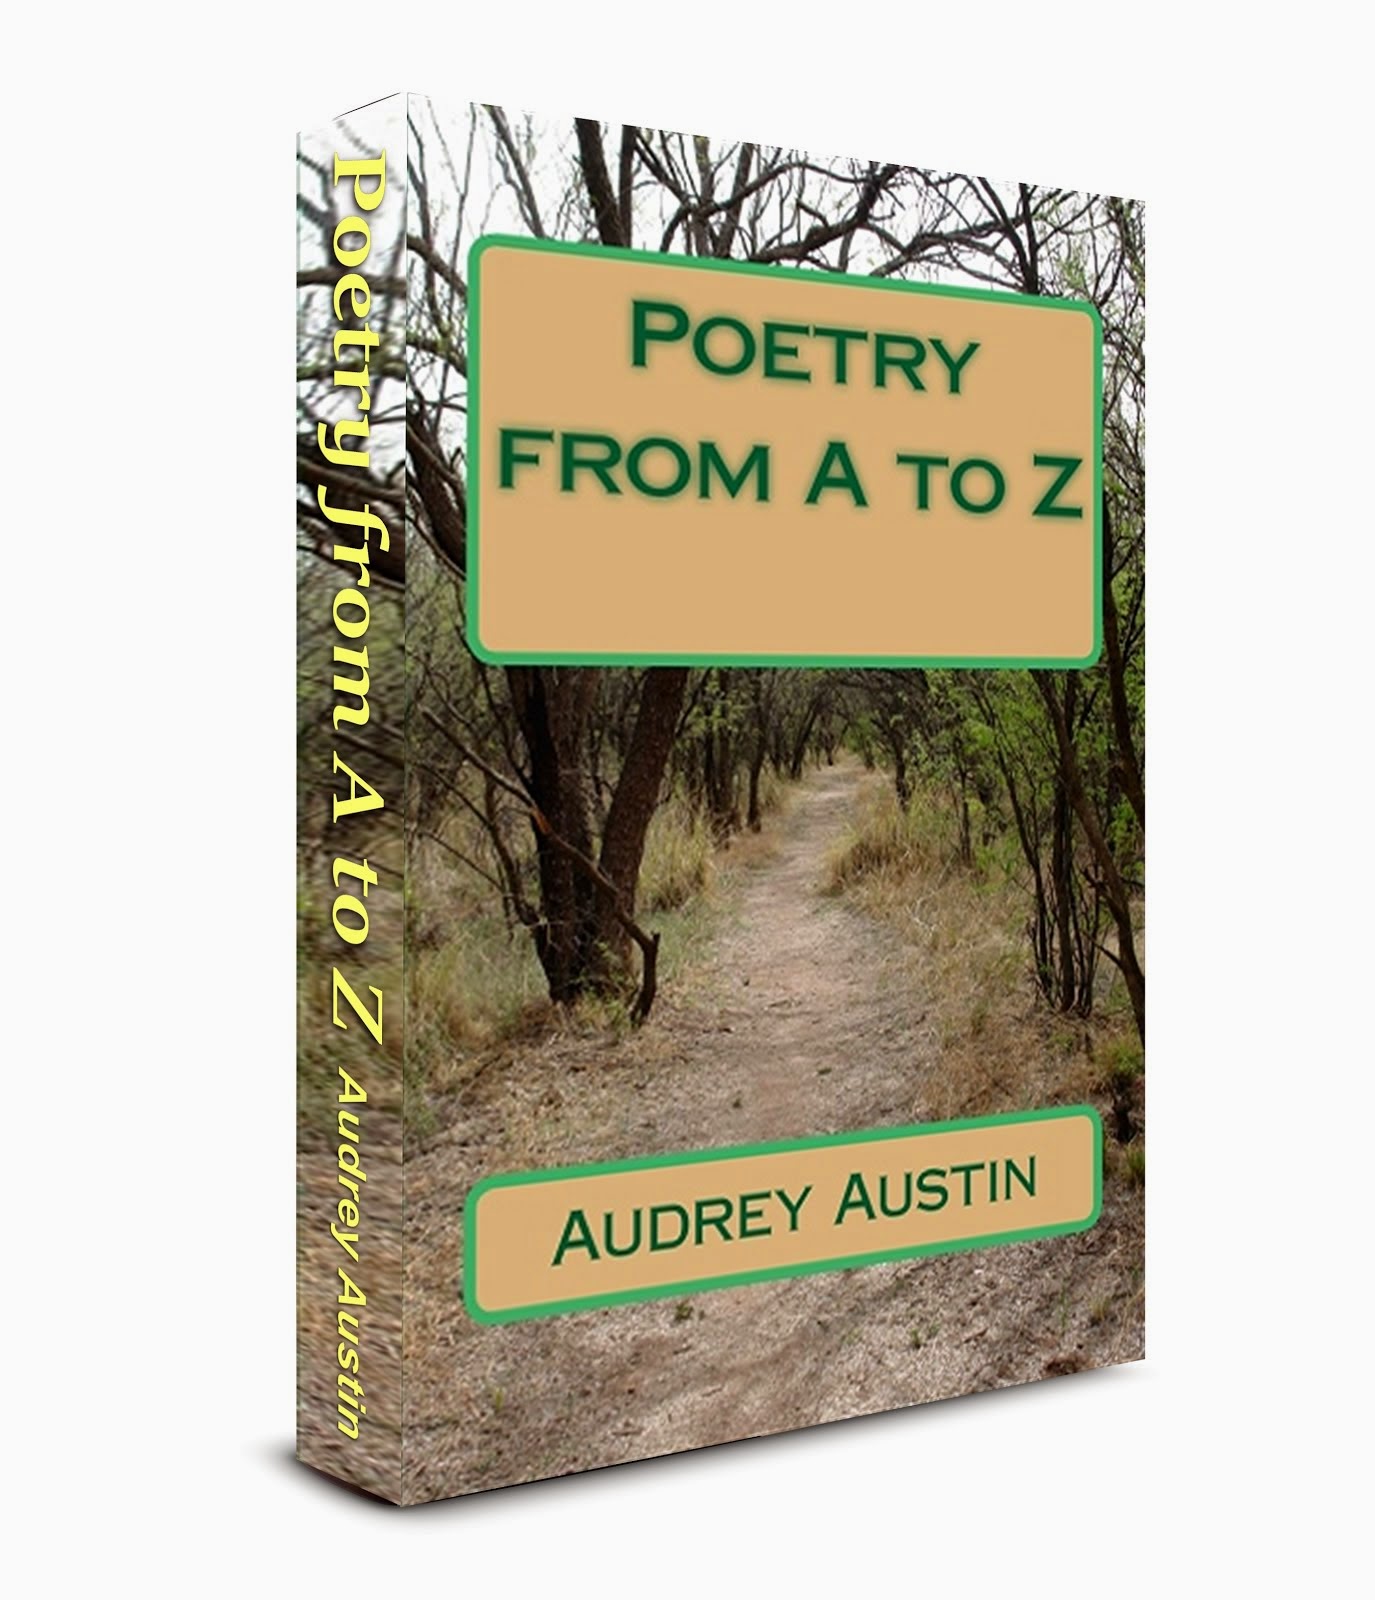 Poet, Audrey Austin